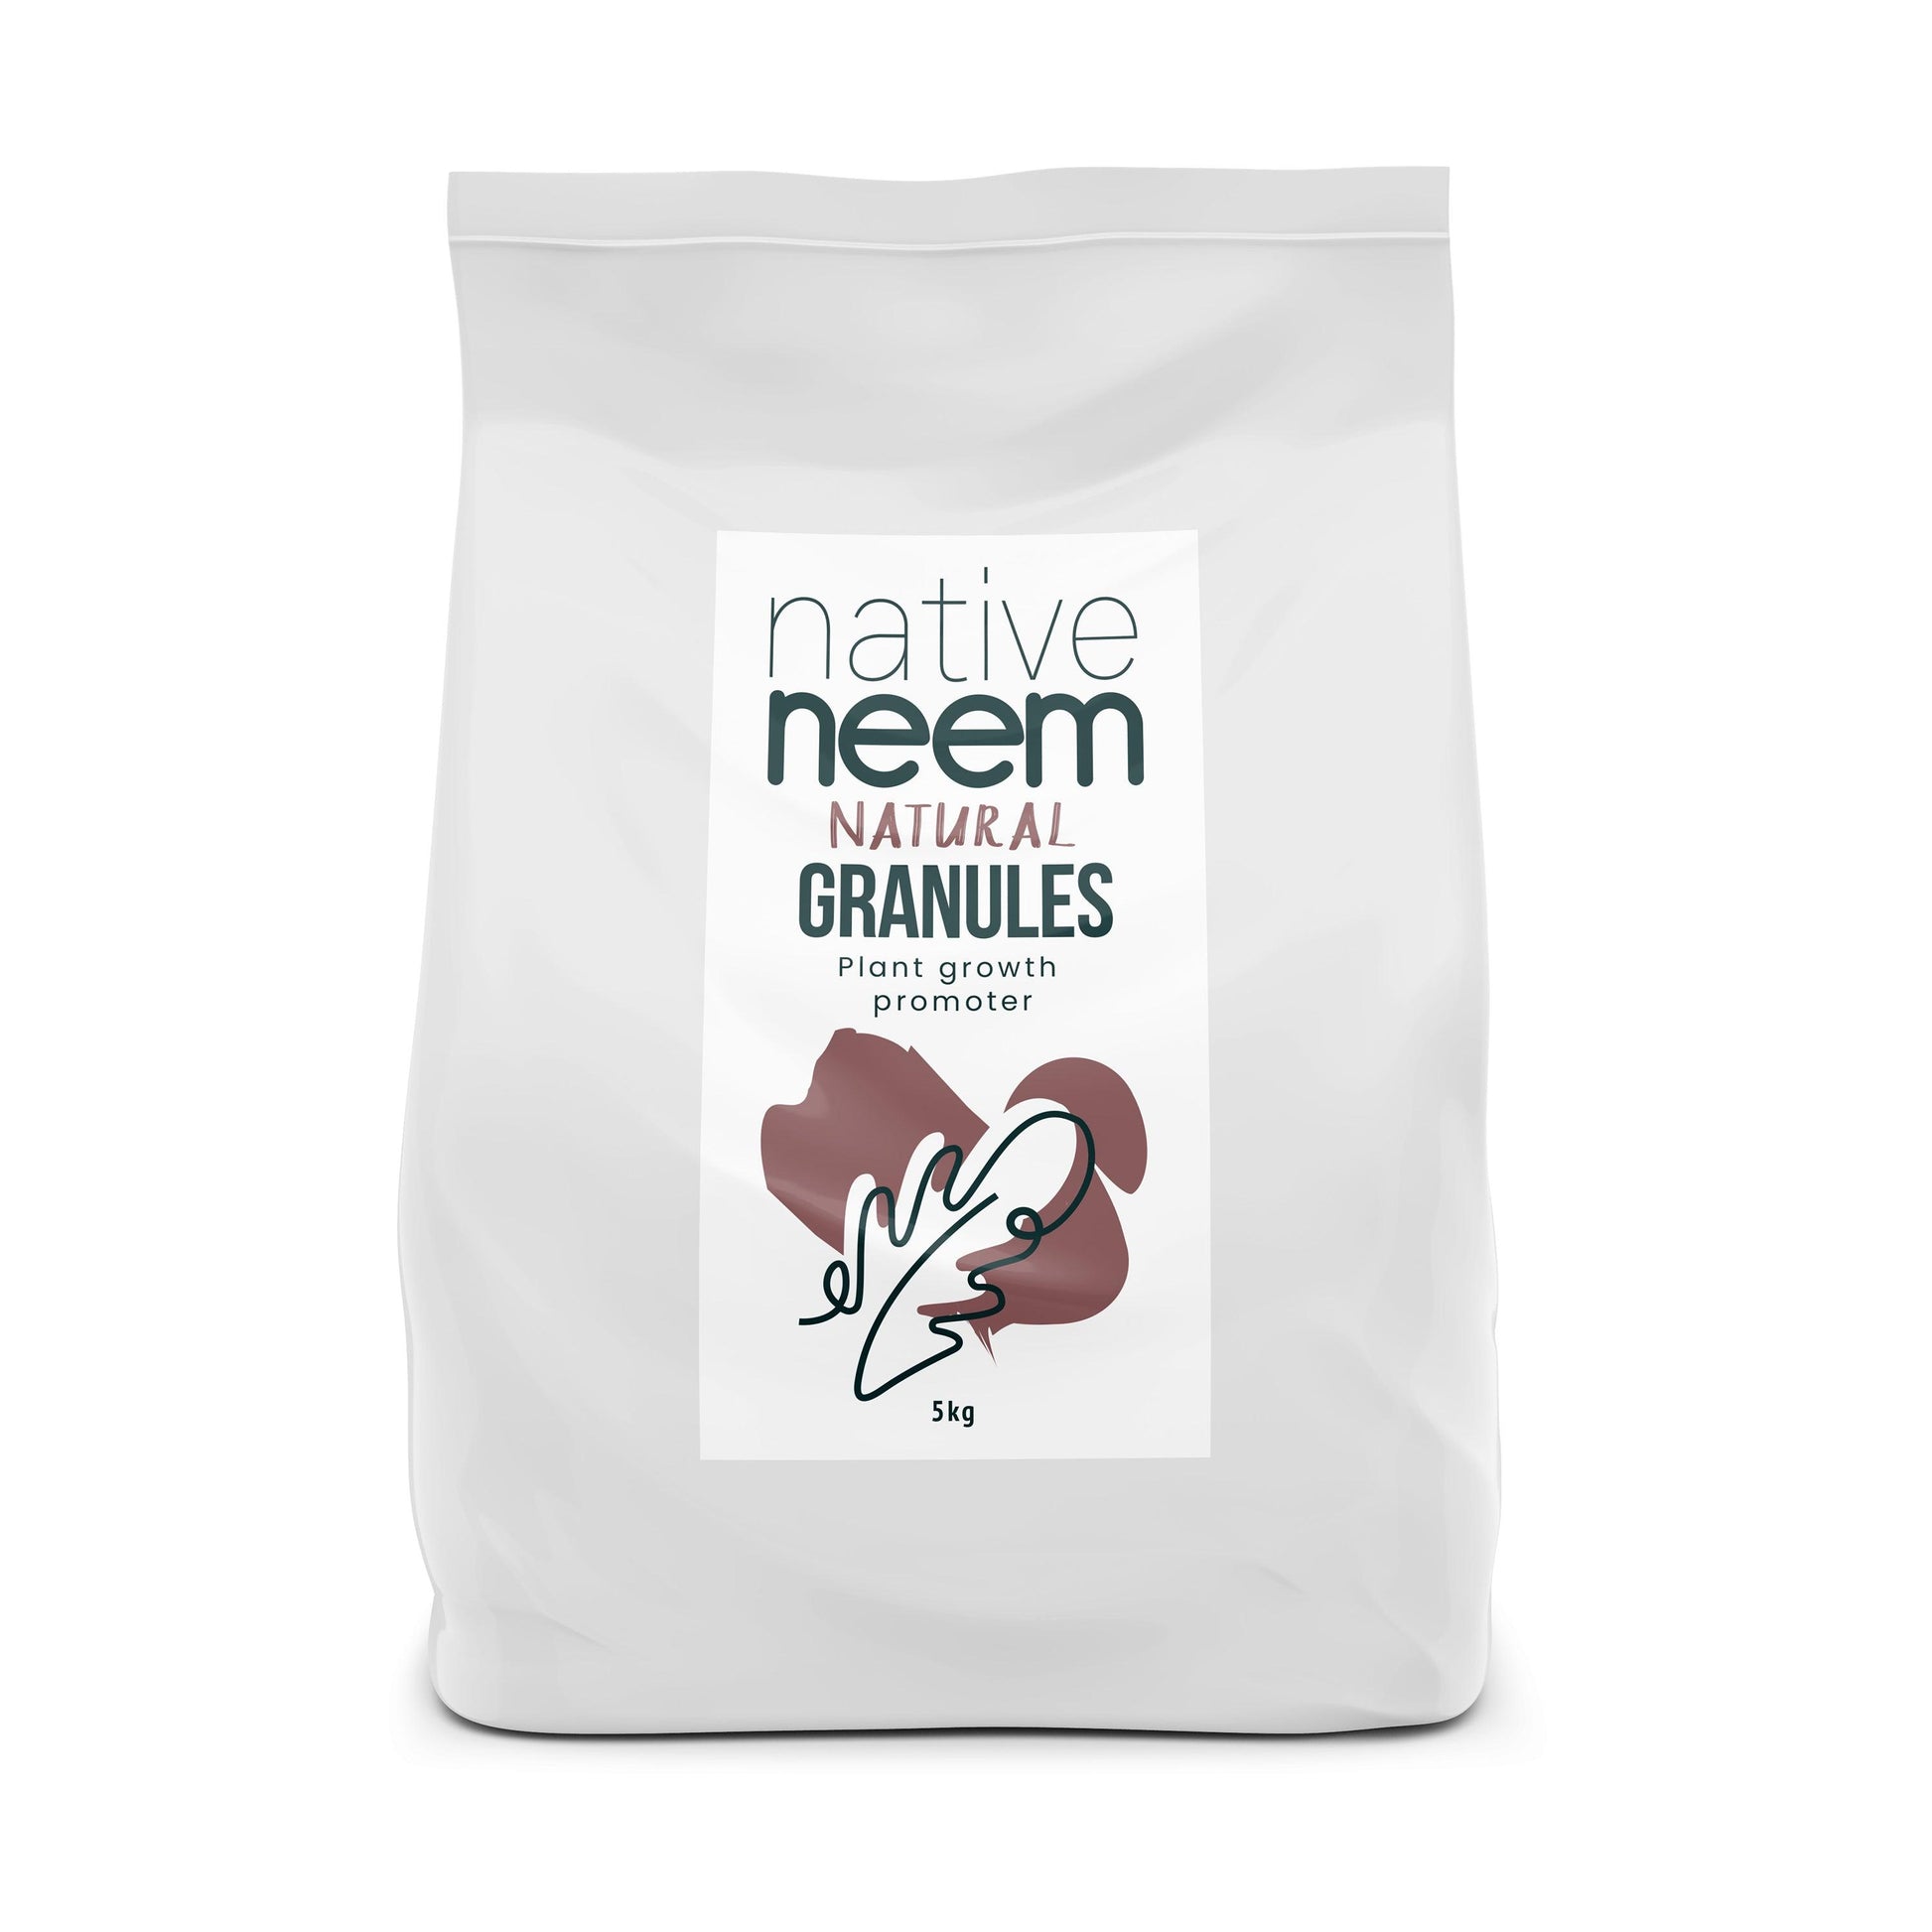 Organic Neem Tree Granules 20kg - Green Trading